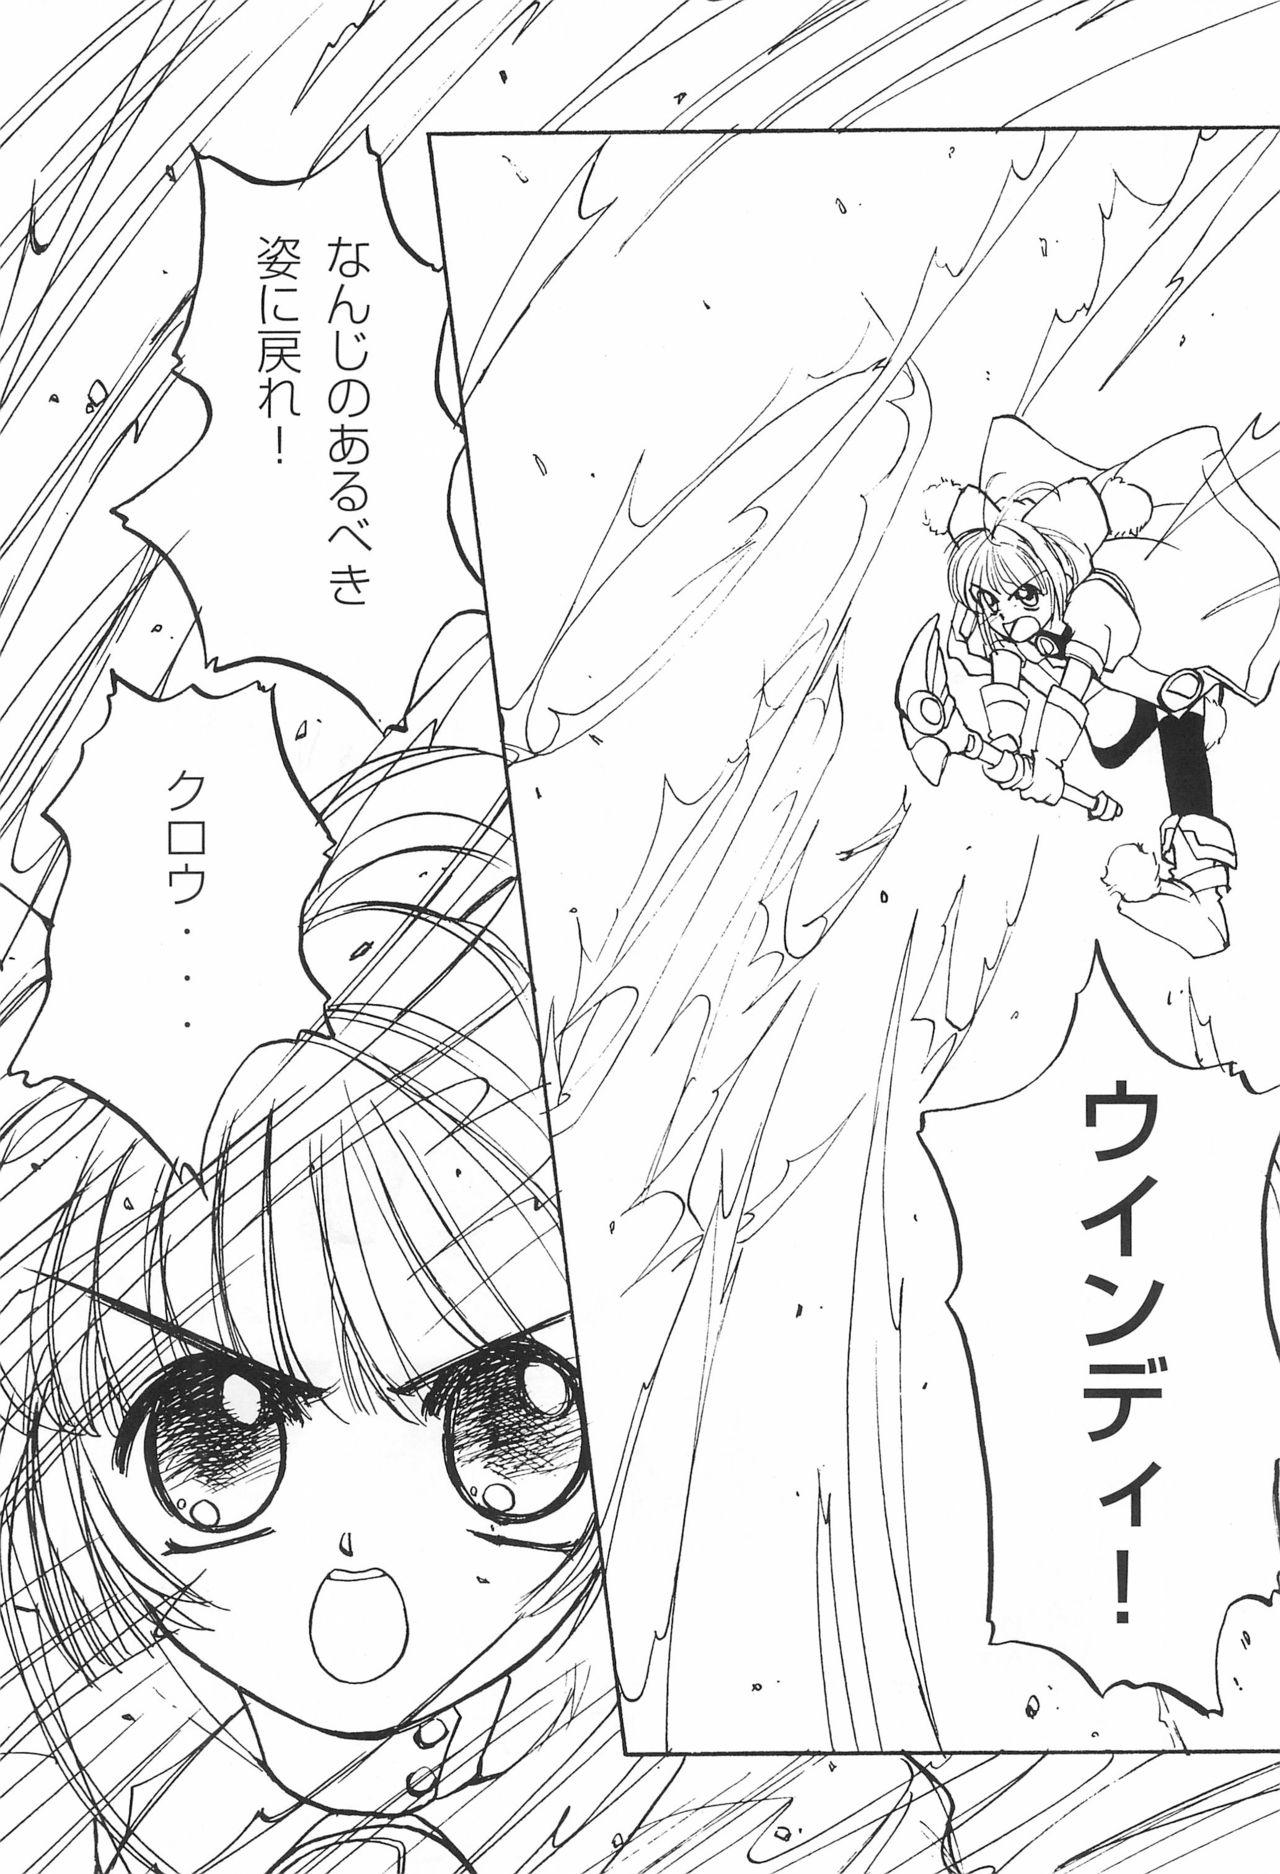 Nalgas SAKURA SECOND - Cardcaptor sakura Rurouni kenshin Lesbians - Page 8